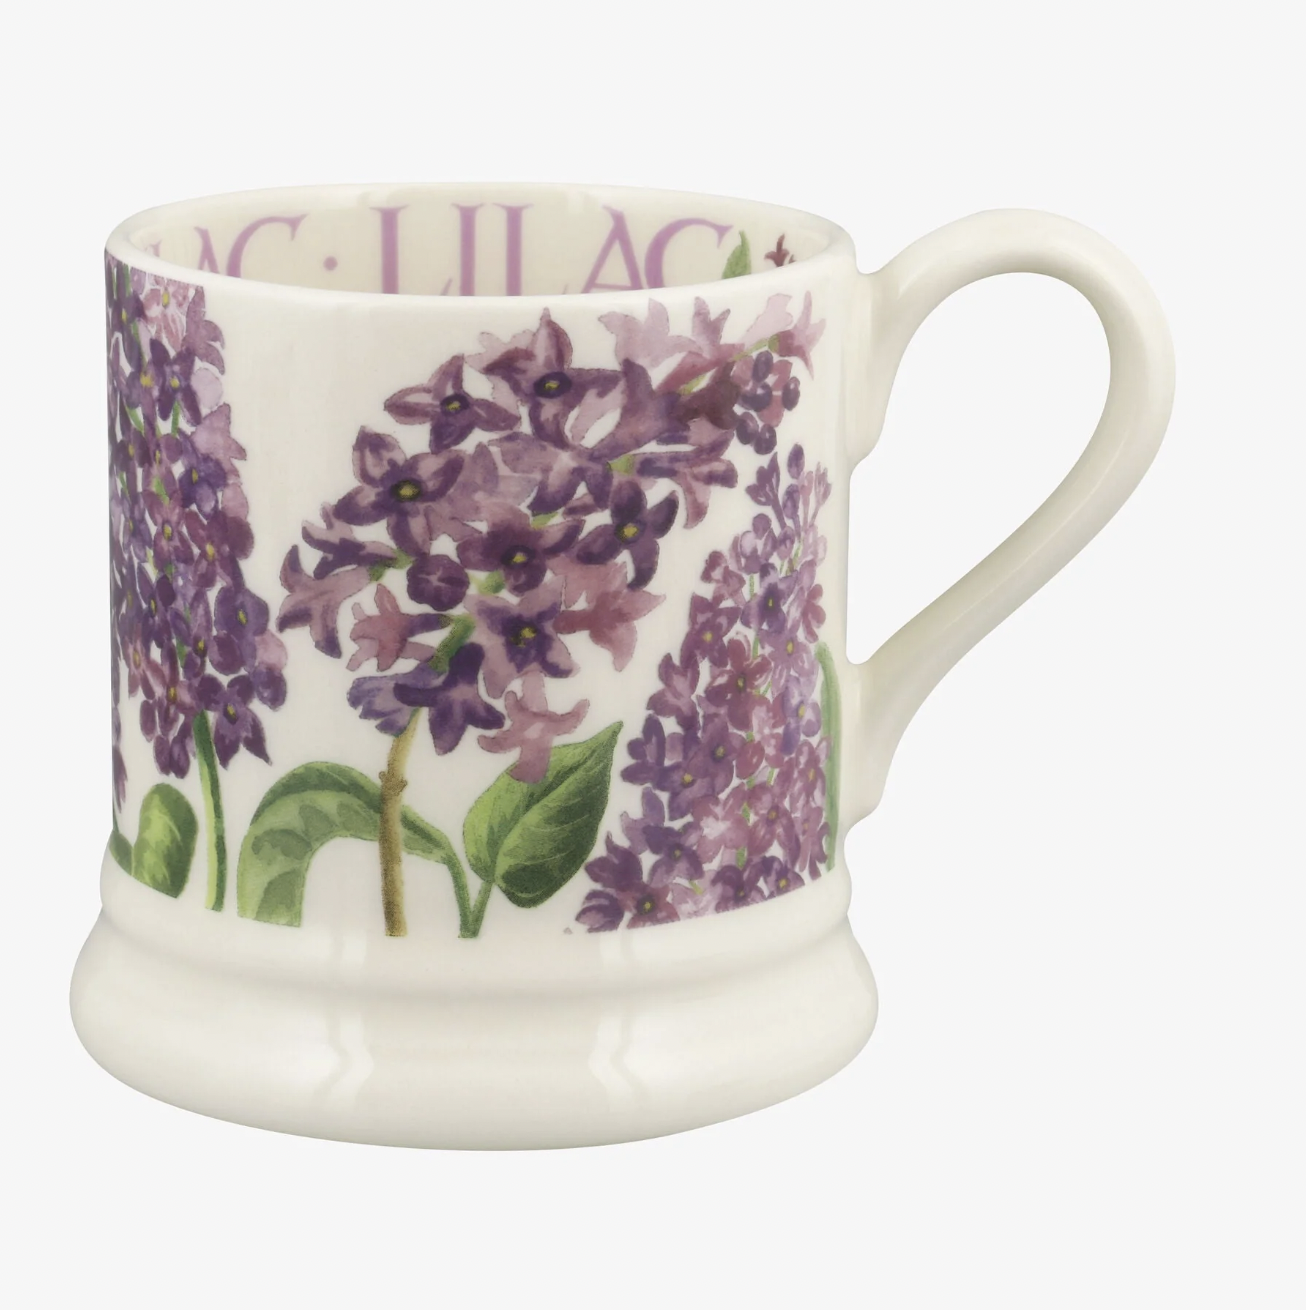 Emma Bridgewater Lilac 1/2 pint Mug